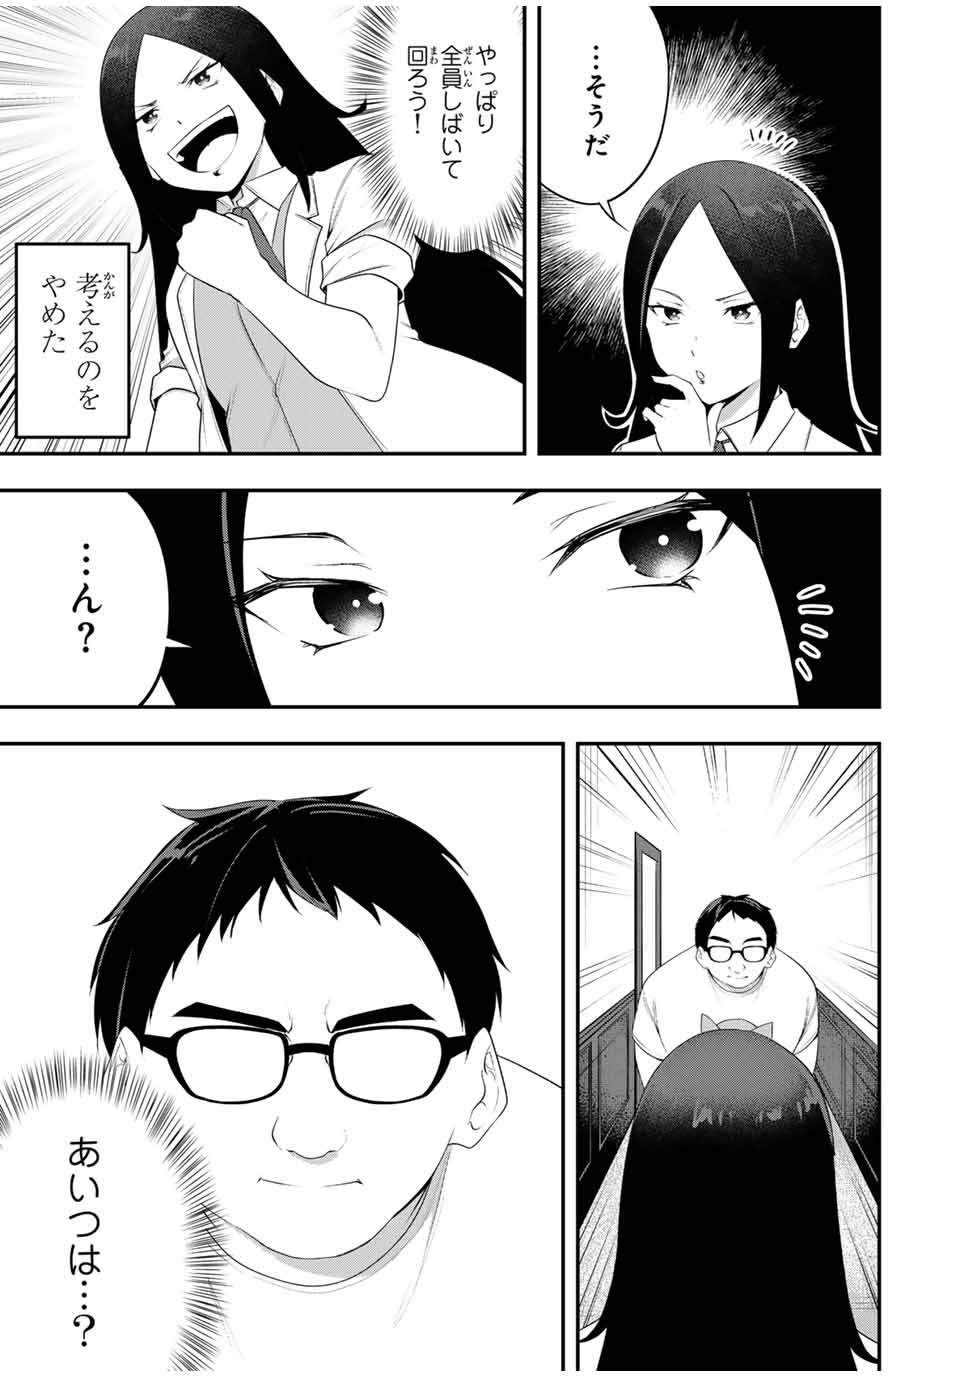 Heroine wa xx Okasegitai - Chapter 14 - Page 3